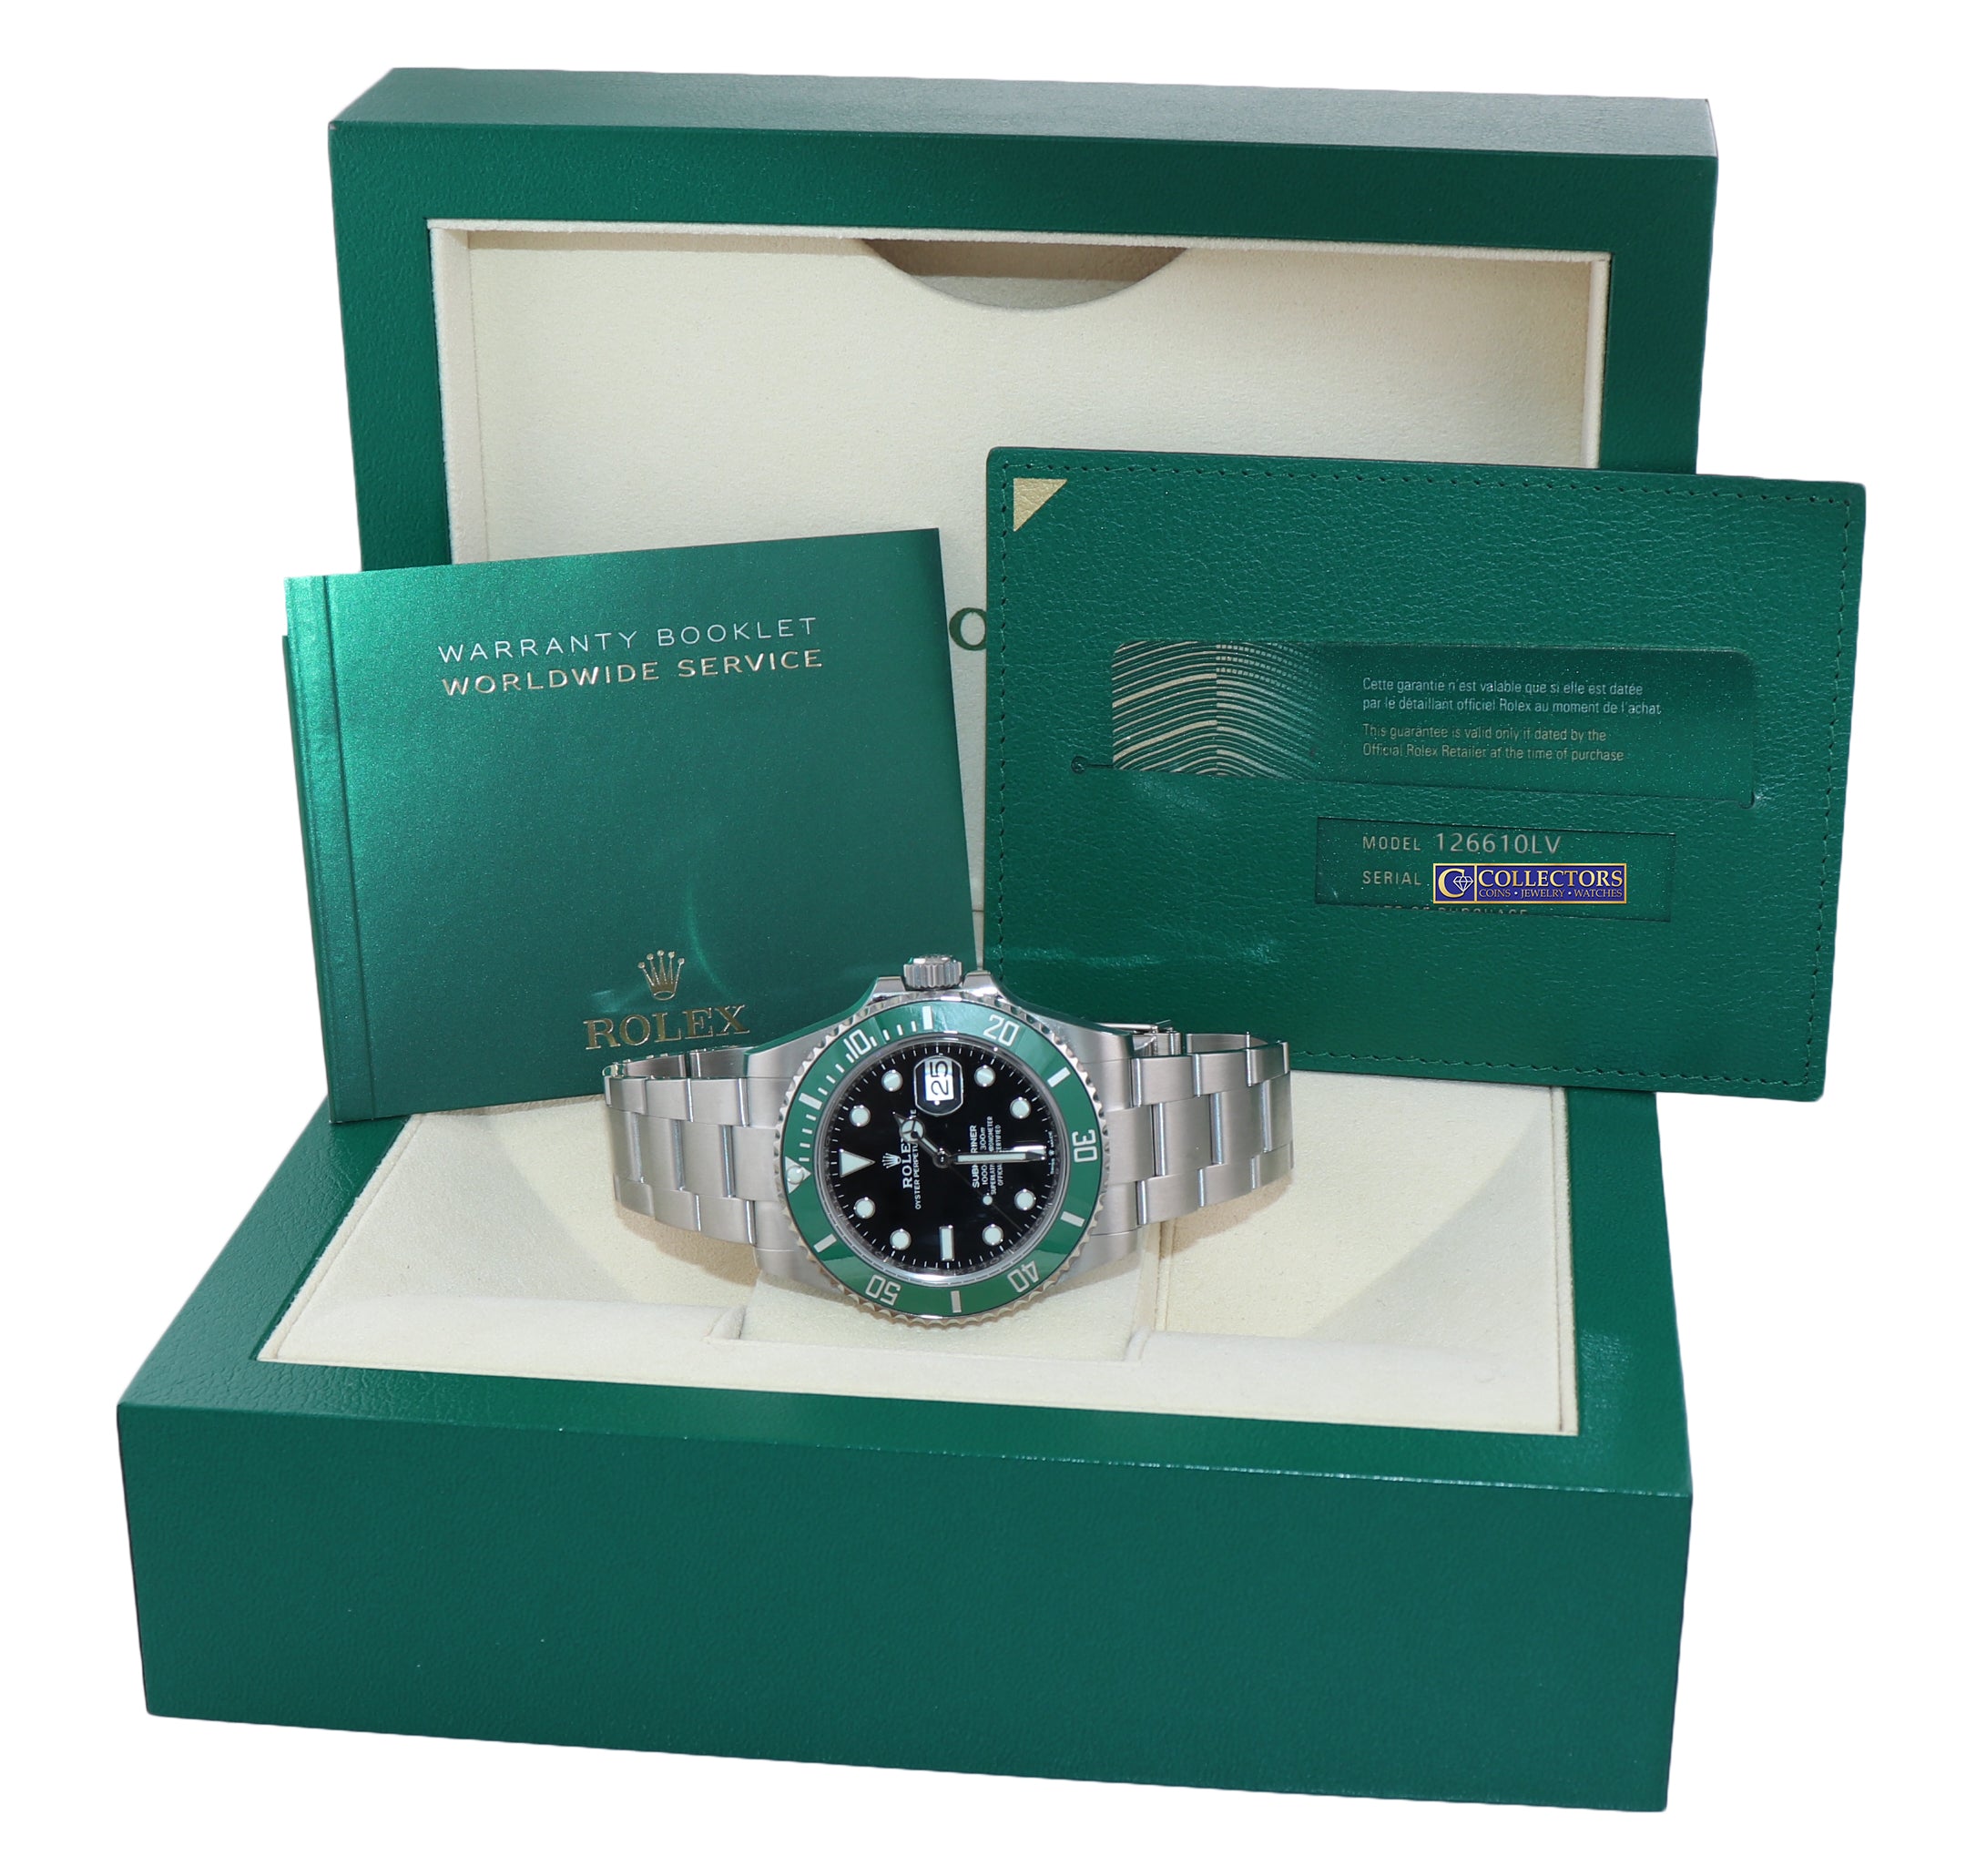 NEW 2022 PAPERS Rolex Submariner 41mm GREEN KERMIT Ceramic 126610LV Steel Watch